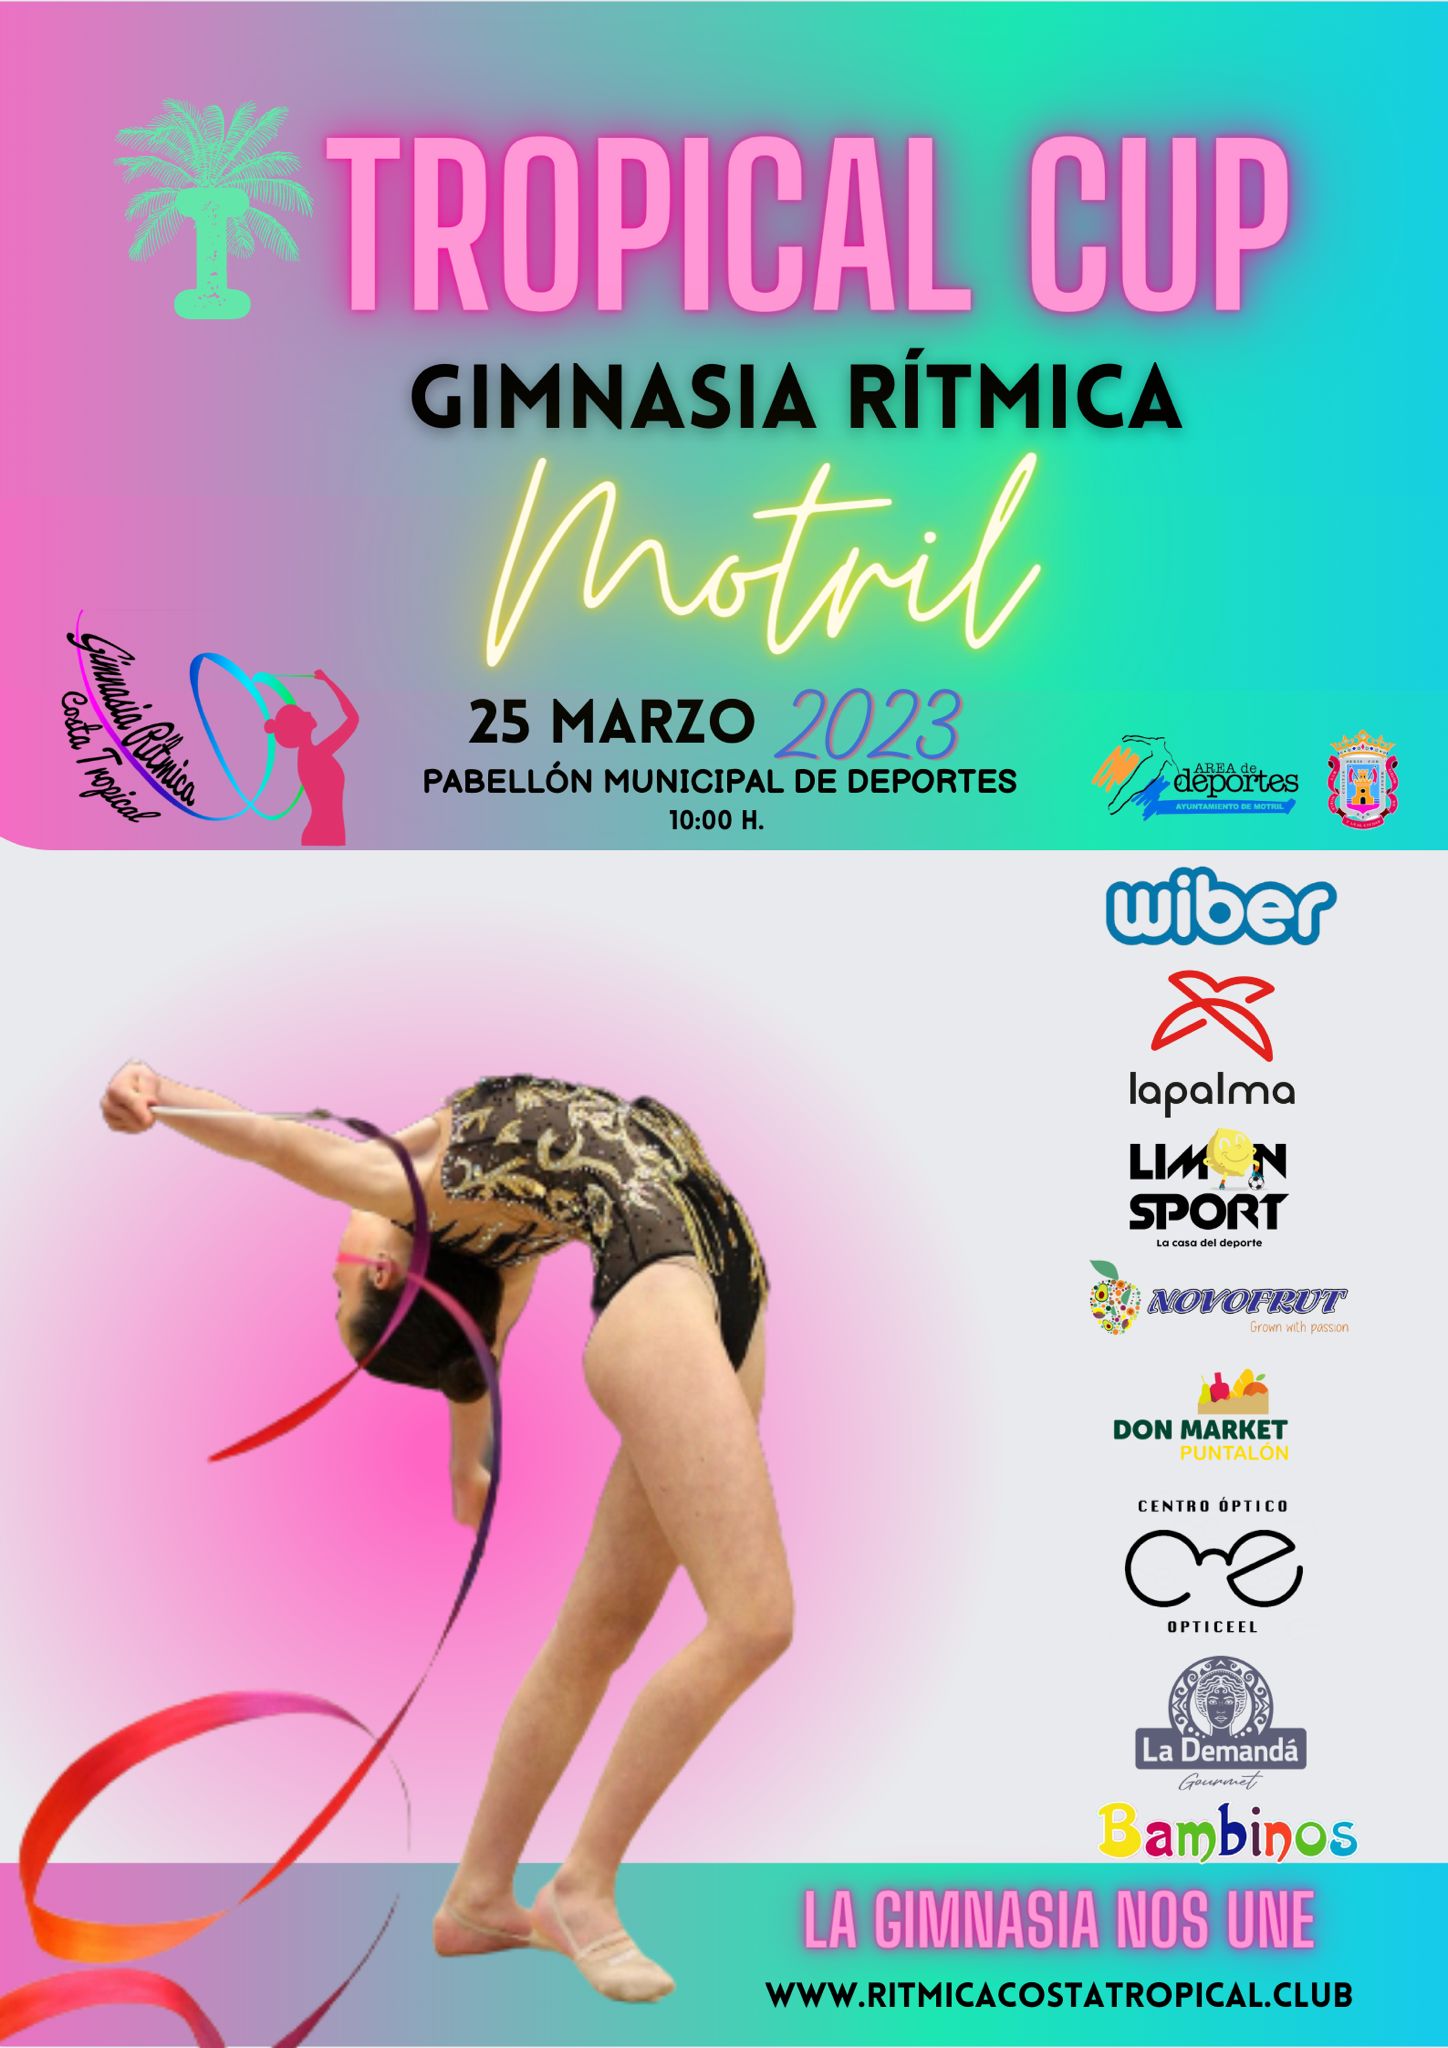 La I Tropical Cup de Gimnasia Rítmica congregará a 460 gimnastas este sábado en Motril